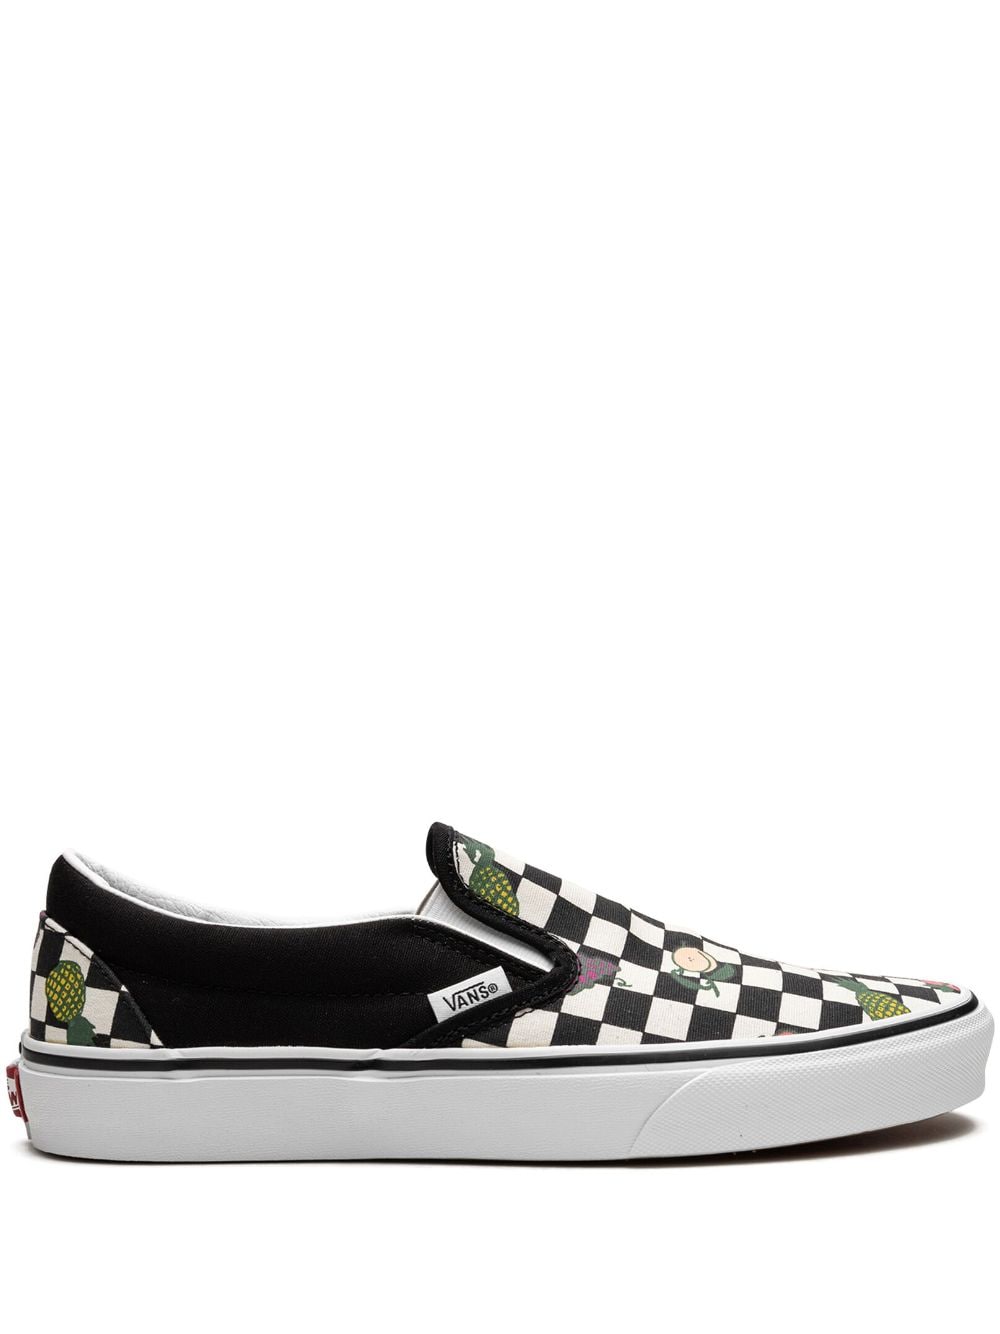 Vans fruit checkerboard Classic Slip-On sneakers - Multicolour von Vans